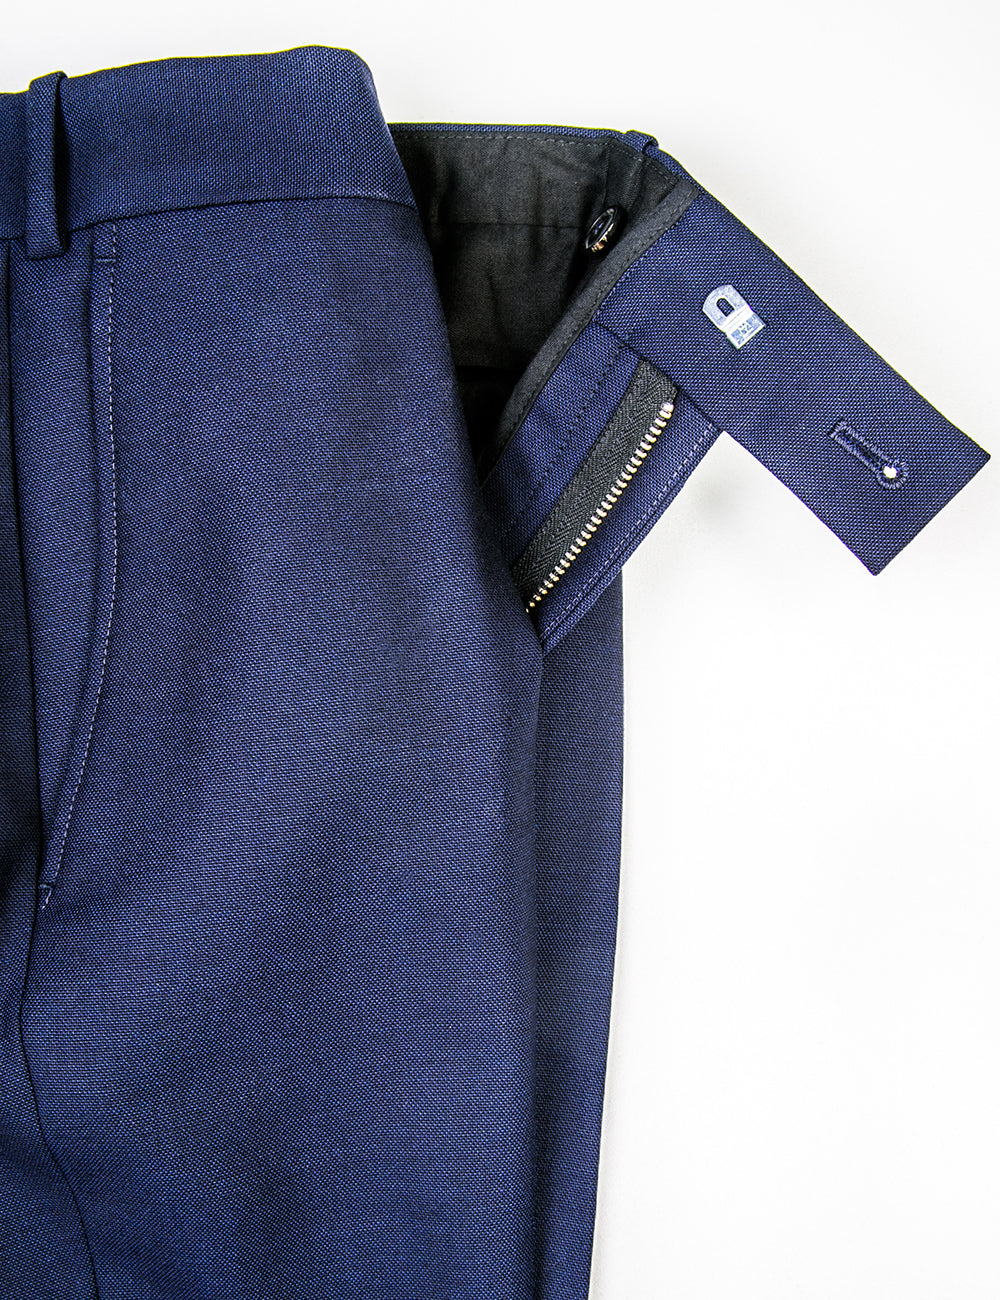 FINAL SALE: BKT50 Tailored Trouser in Travel-Ready Wool - Vivid Navy